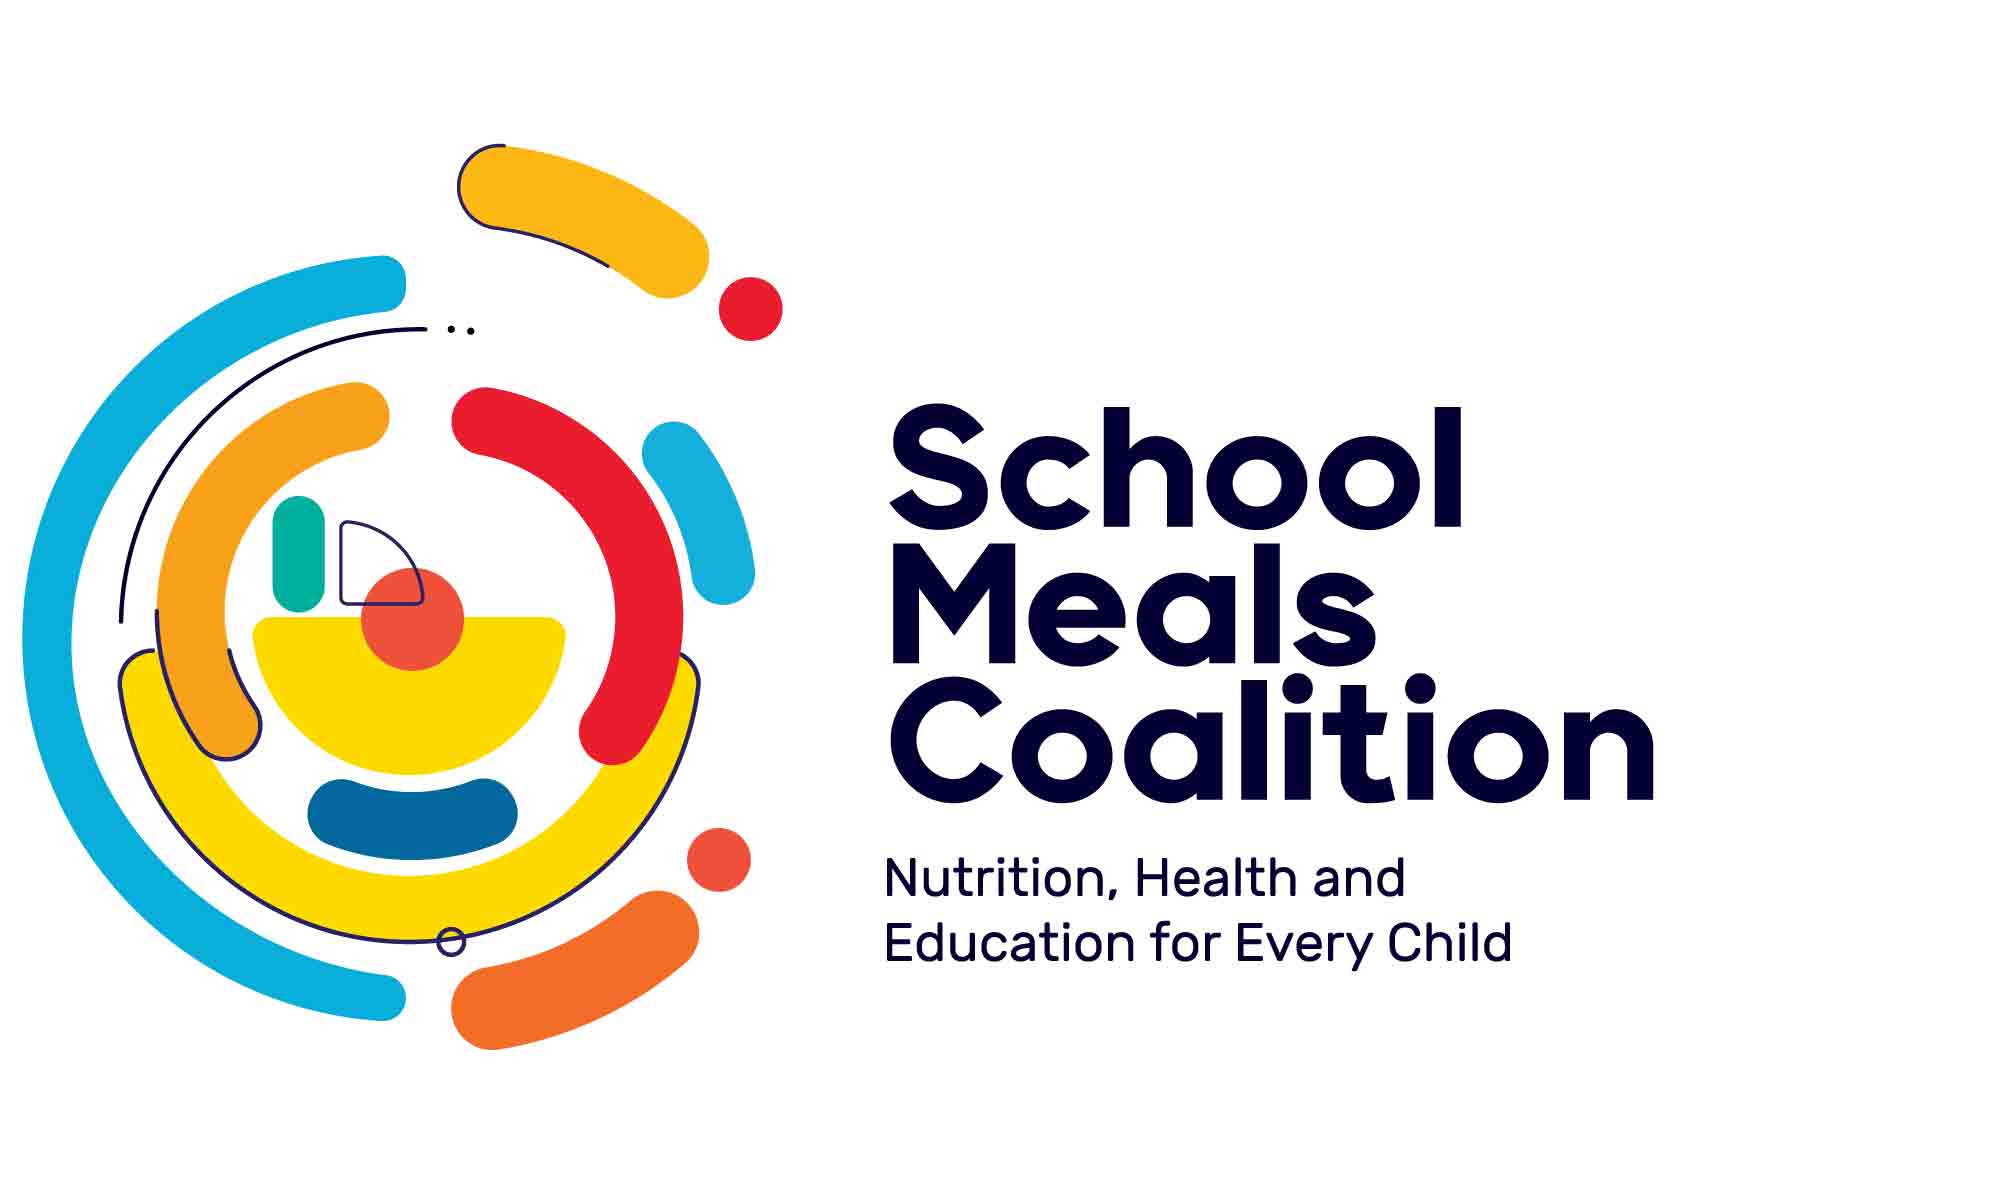 The School Meals Coalition